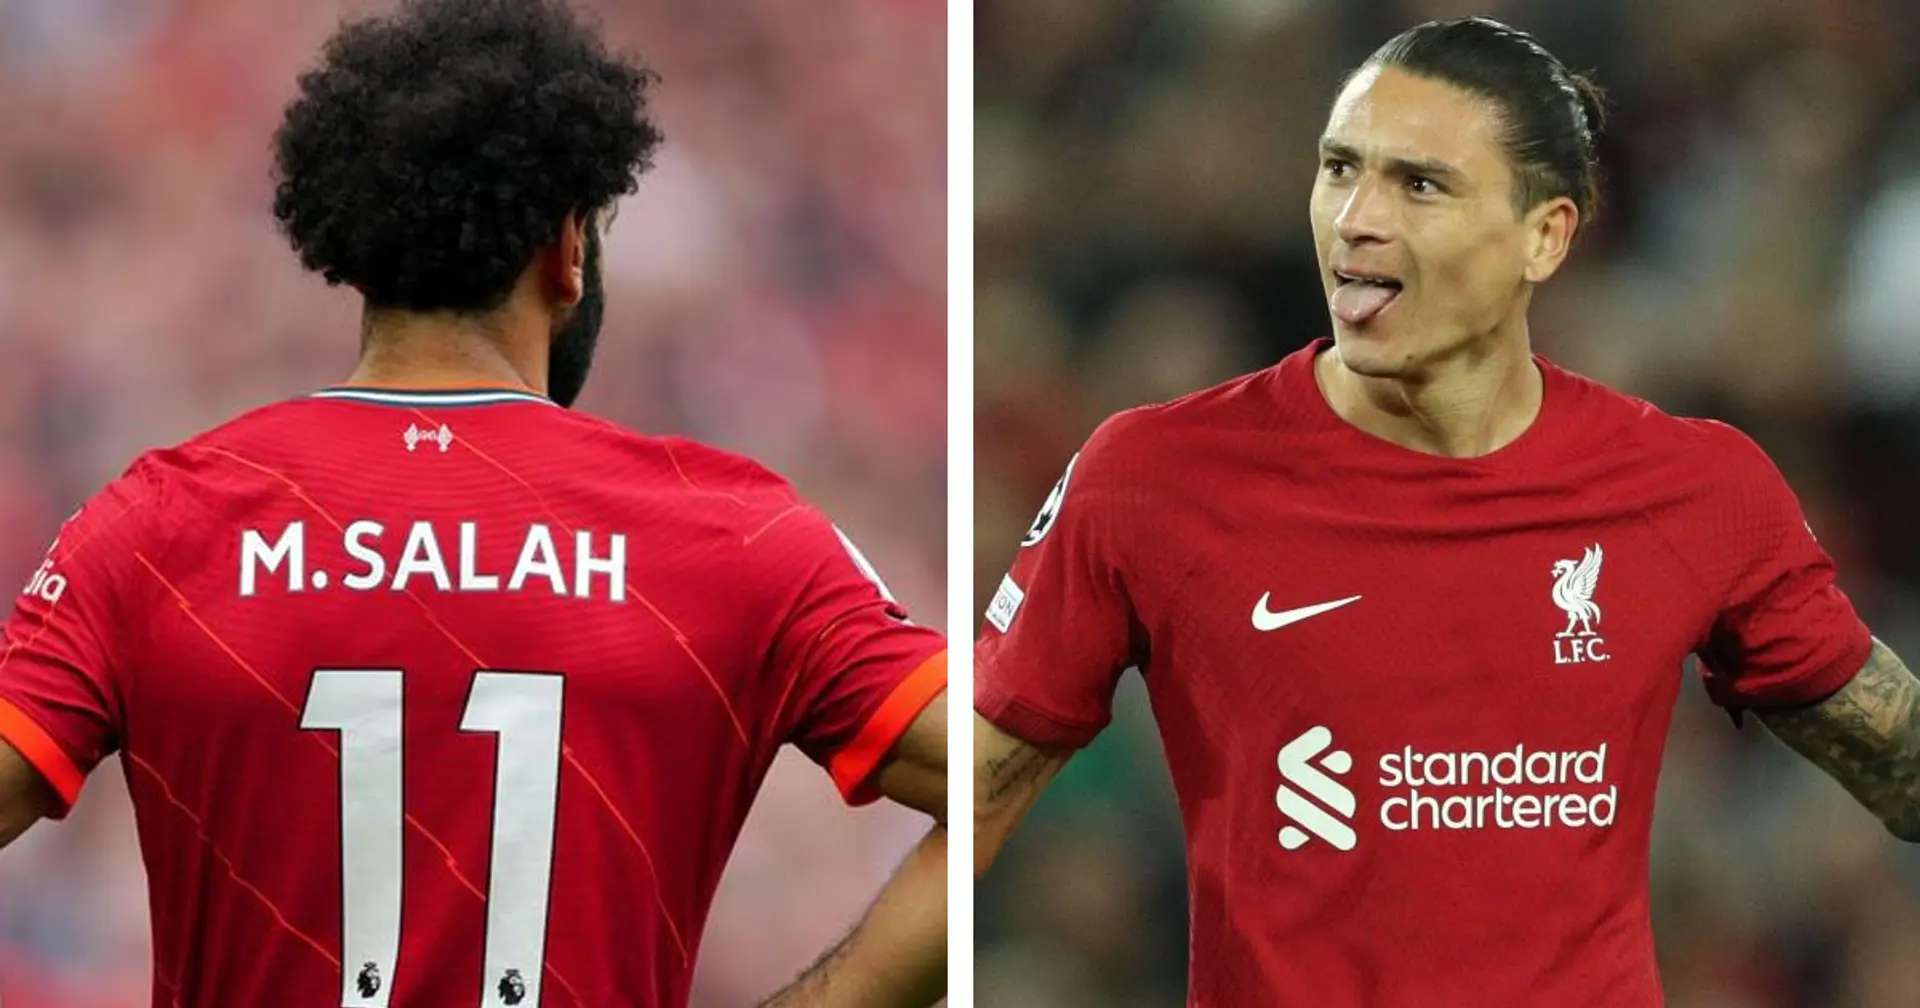 No Van Dijk: Liverpool reveal top-3 shirt sellers in 22/23 season